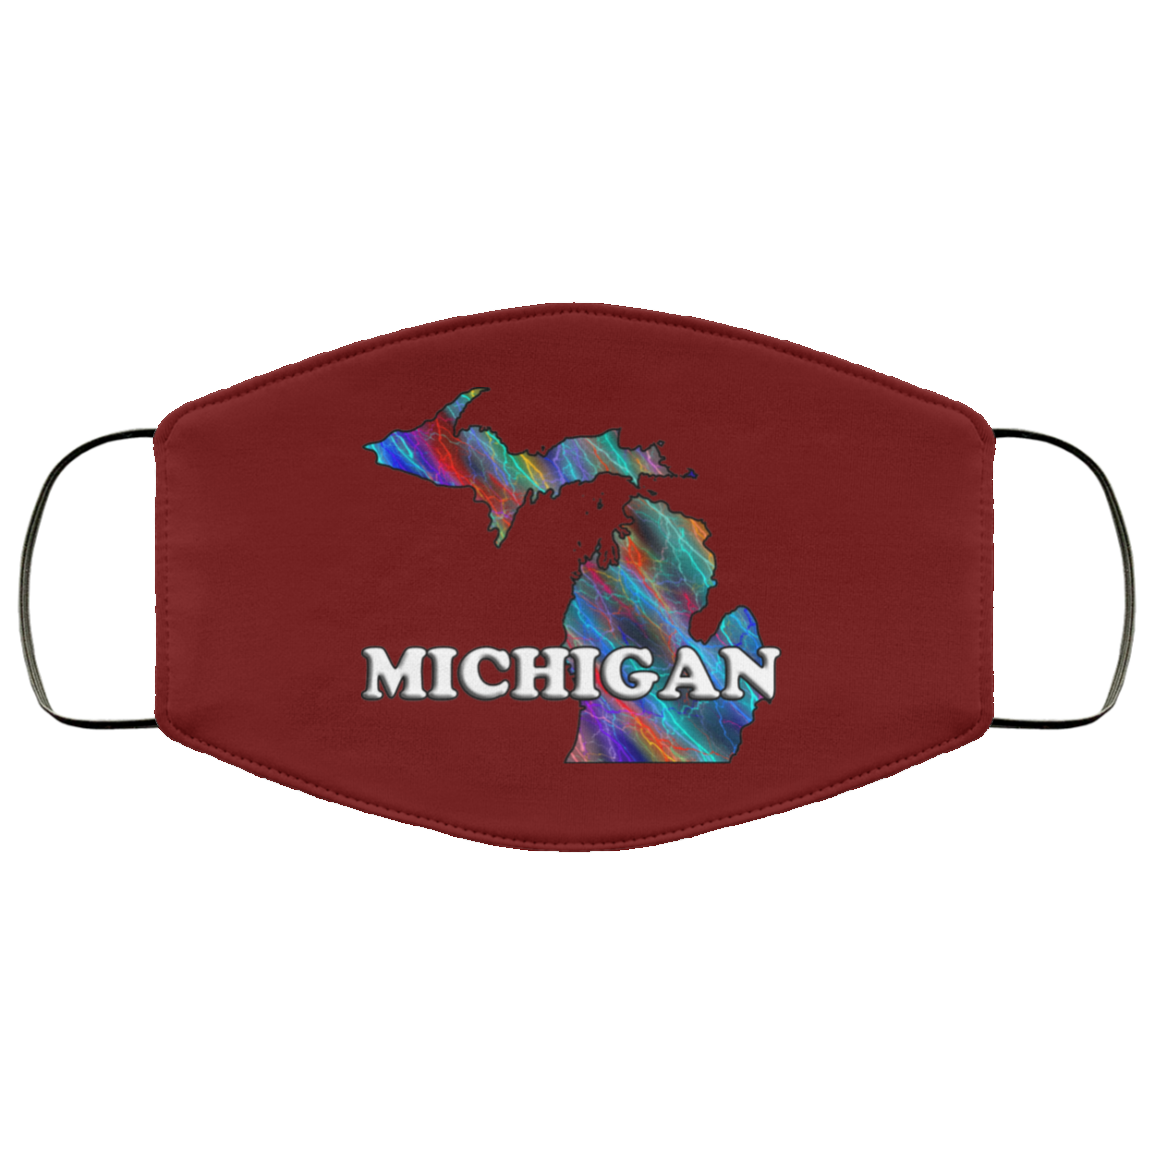 Michigan 2 Layer Protective Face Mask